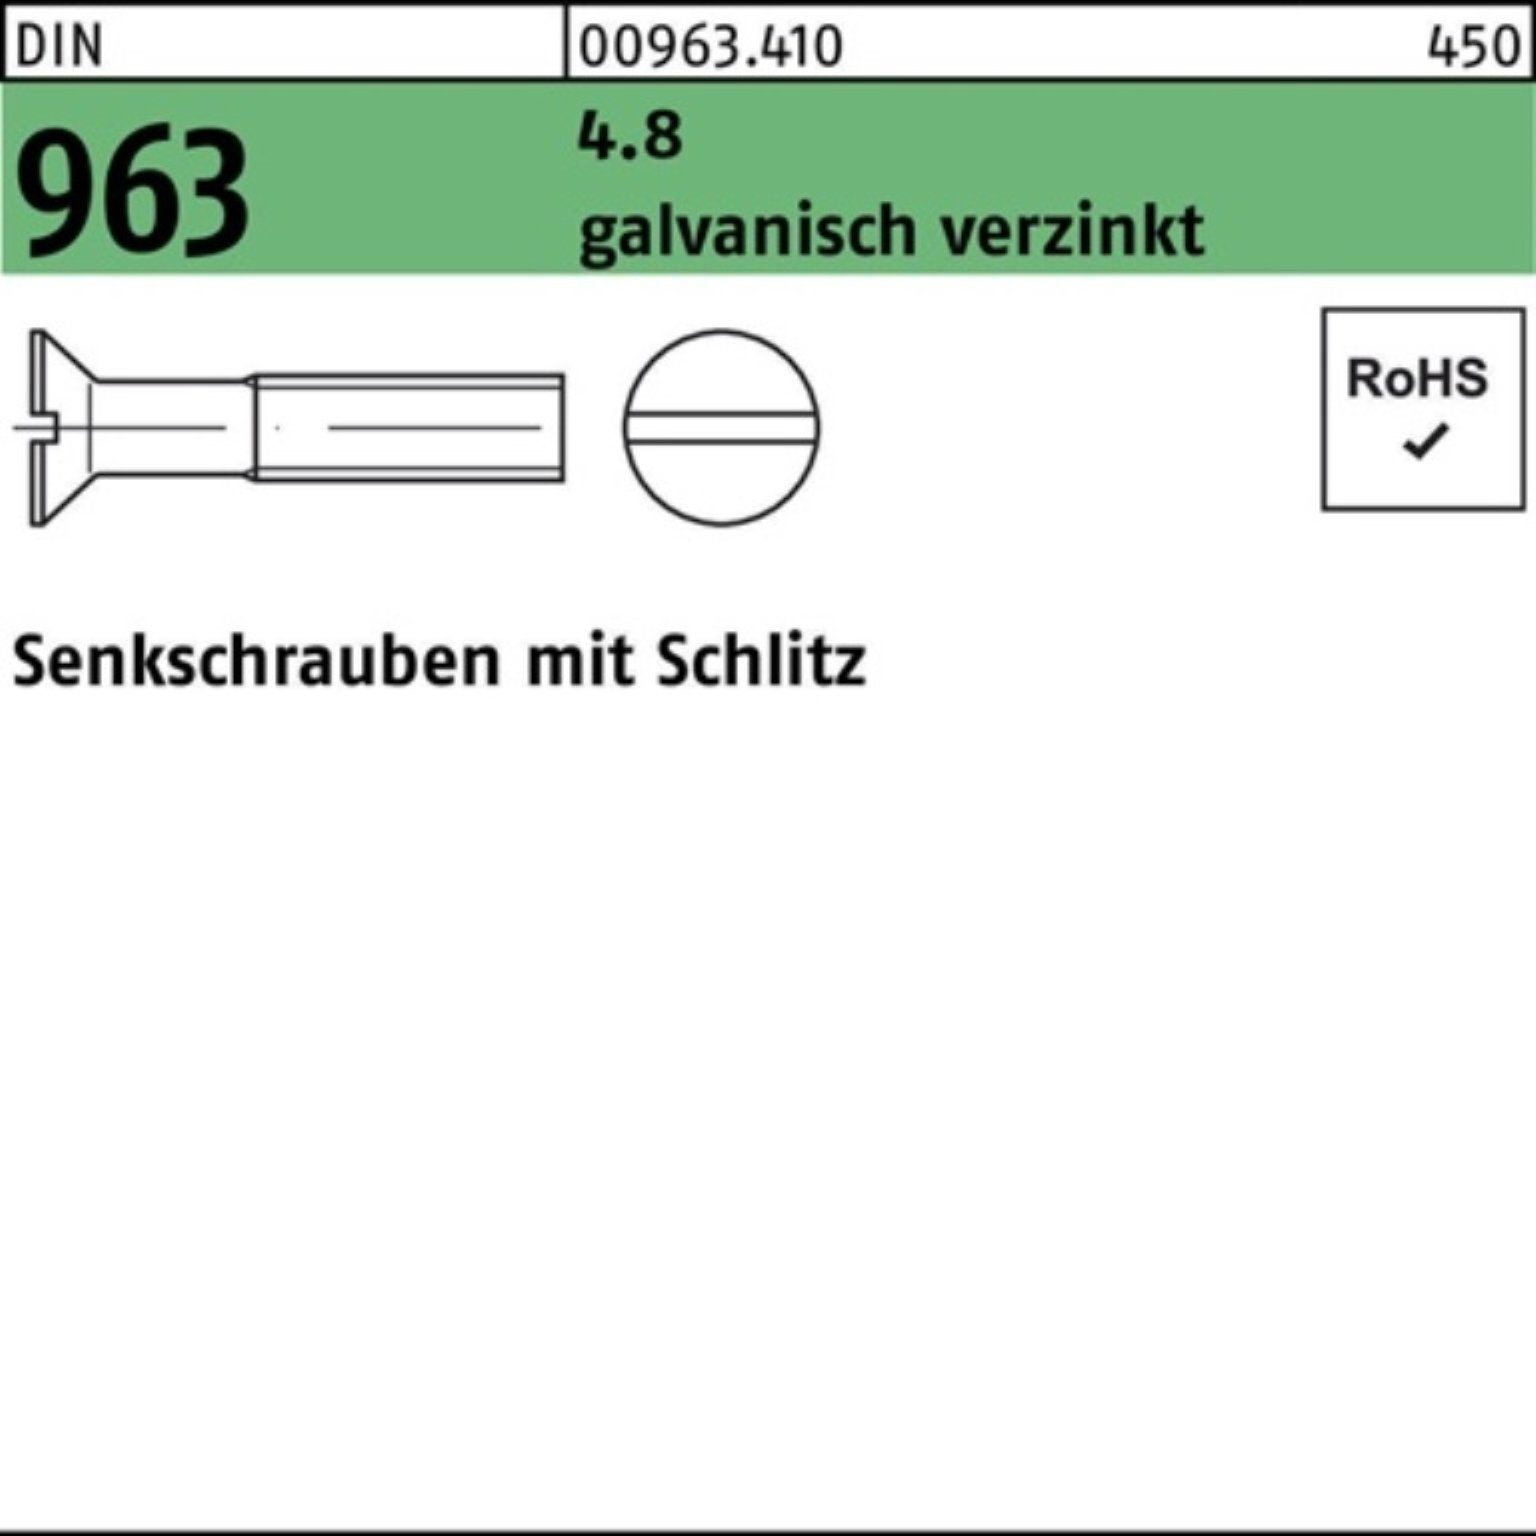 Reyher Senkschraube 100er Pack Senkschraube 963 DIN Stü Schlitz 50 50 4.8 galv.verz. M16x